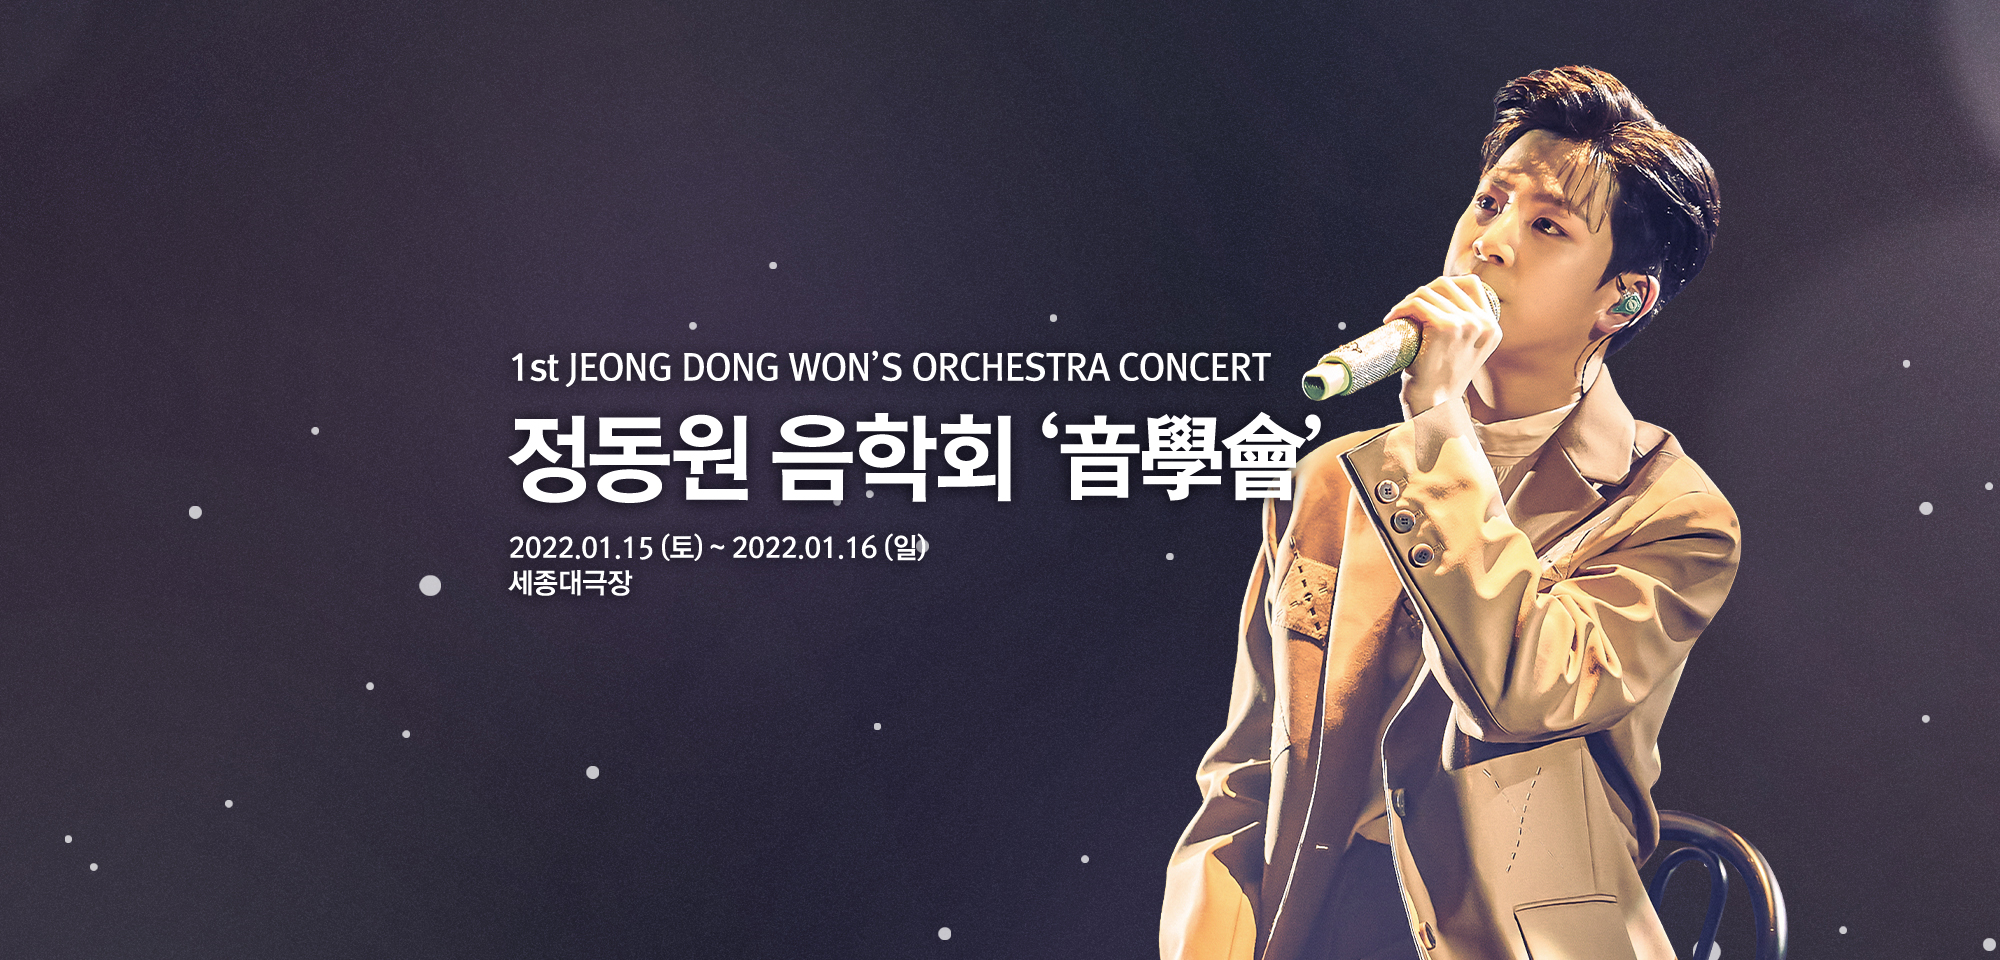 1st Jeong Dong Won's Orchestra Concert 정동원 음학회 2022.01.15(토)~2022.01.16(일) 세종대극장